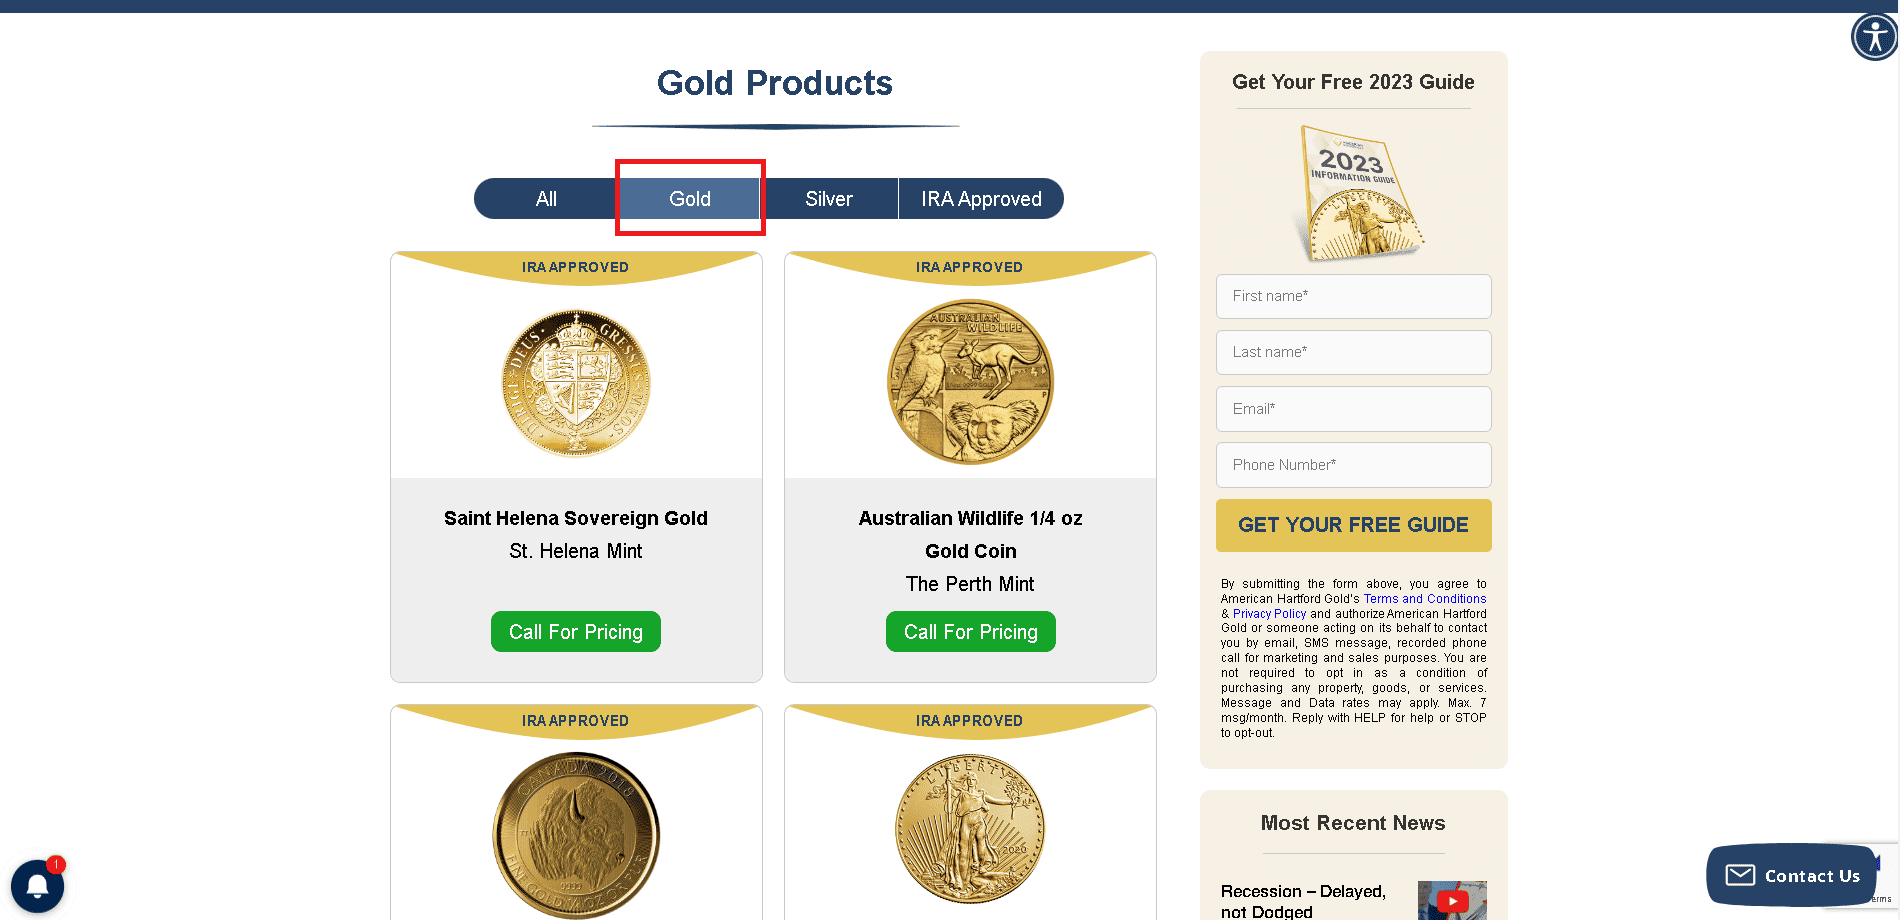 American Hartford Gold gold bullion